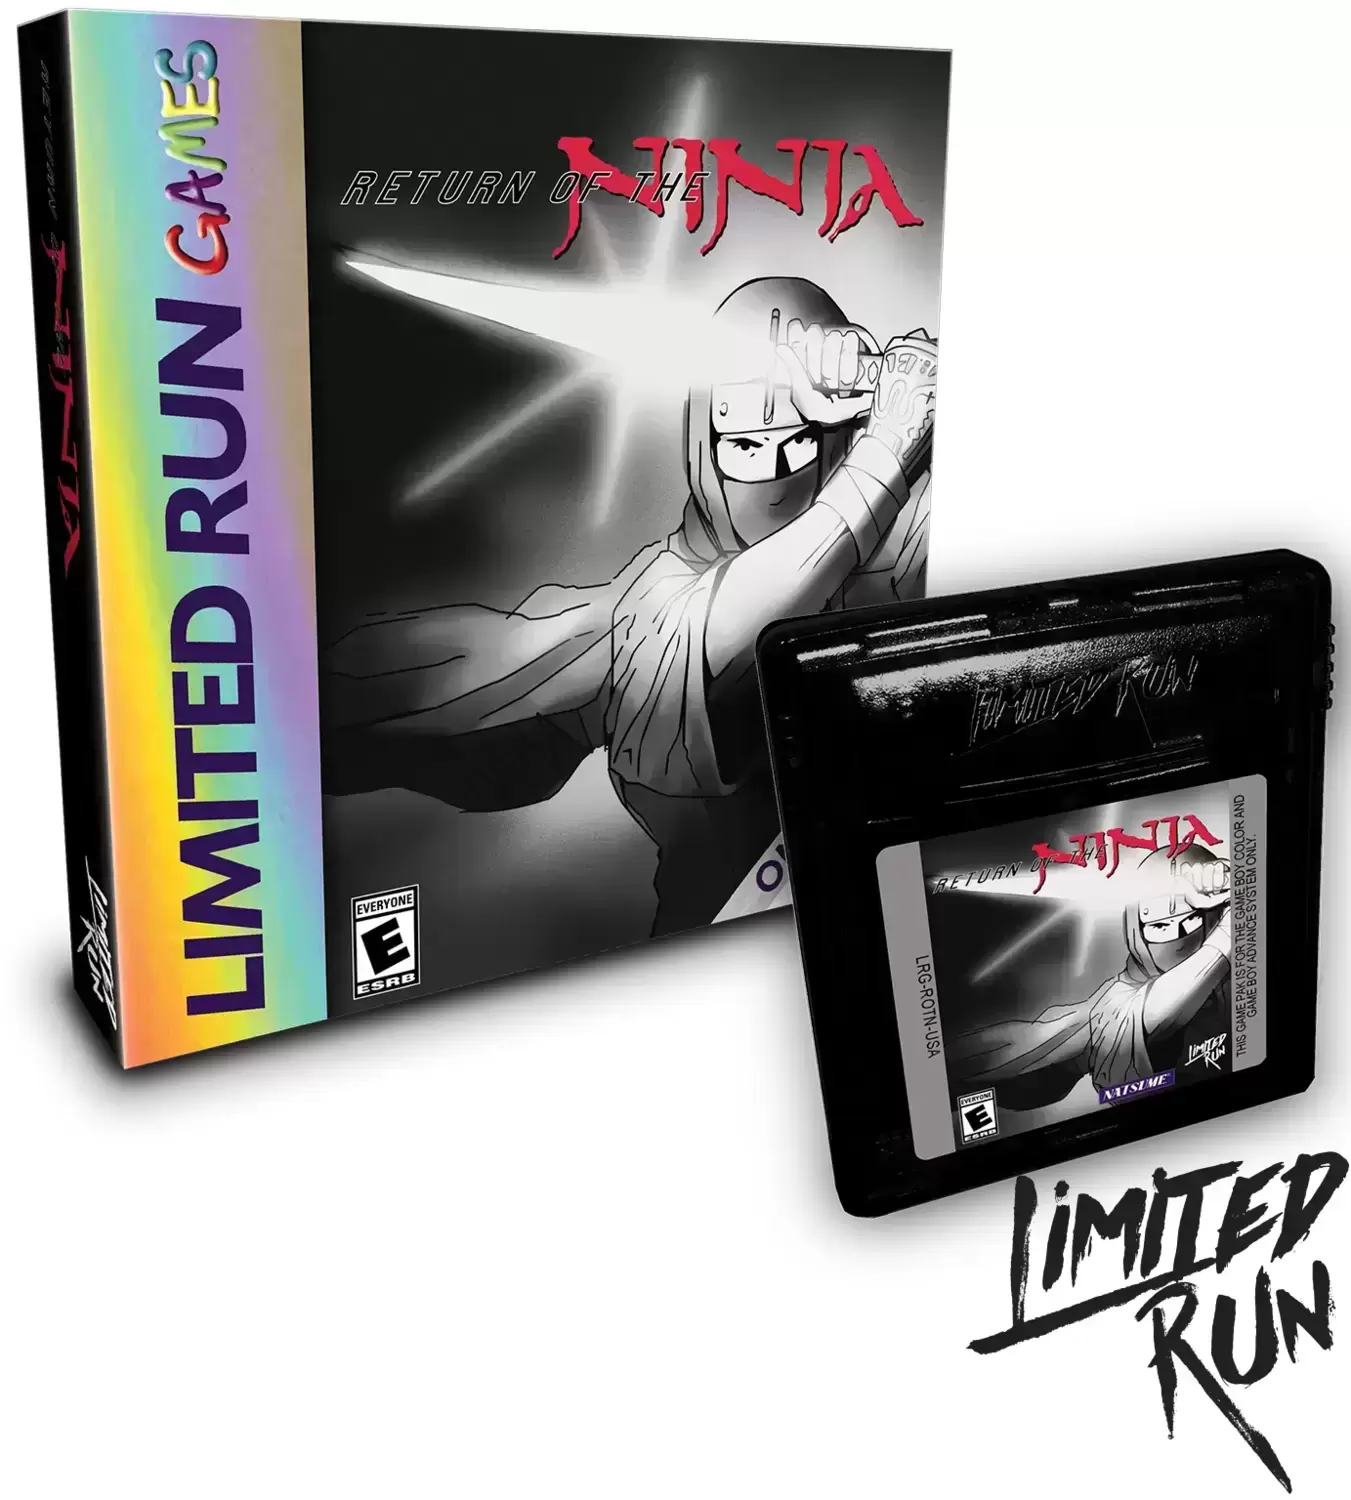 Game Boy Color Games - Return of the Ninja Black Version - Limited Run Games